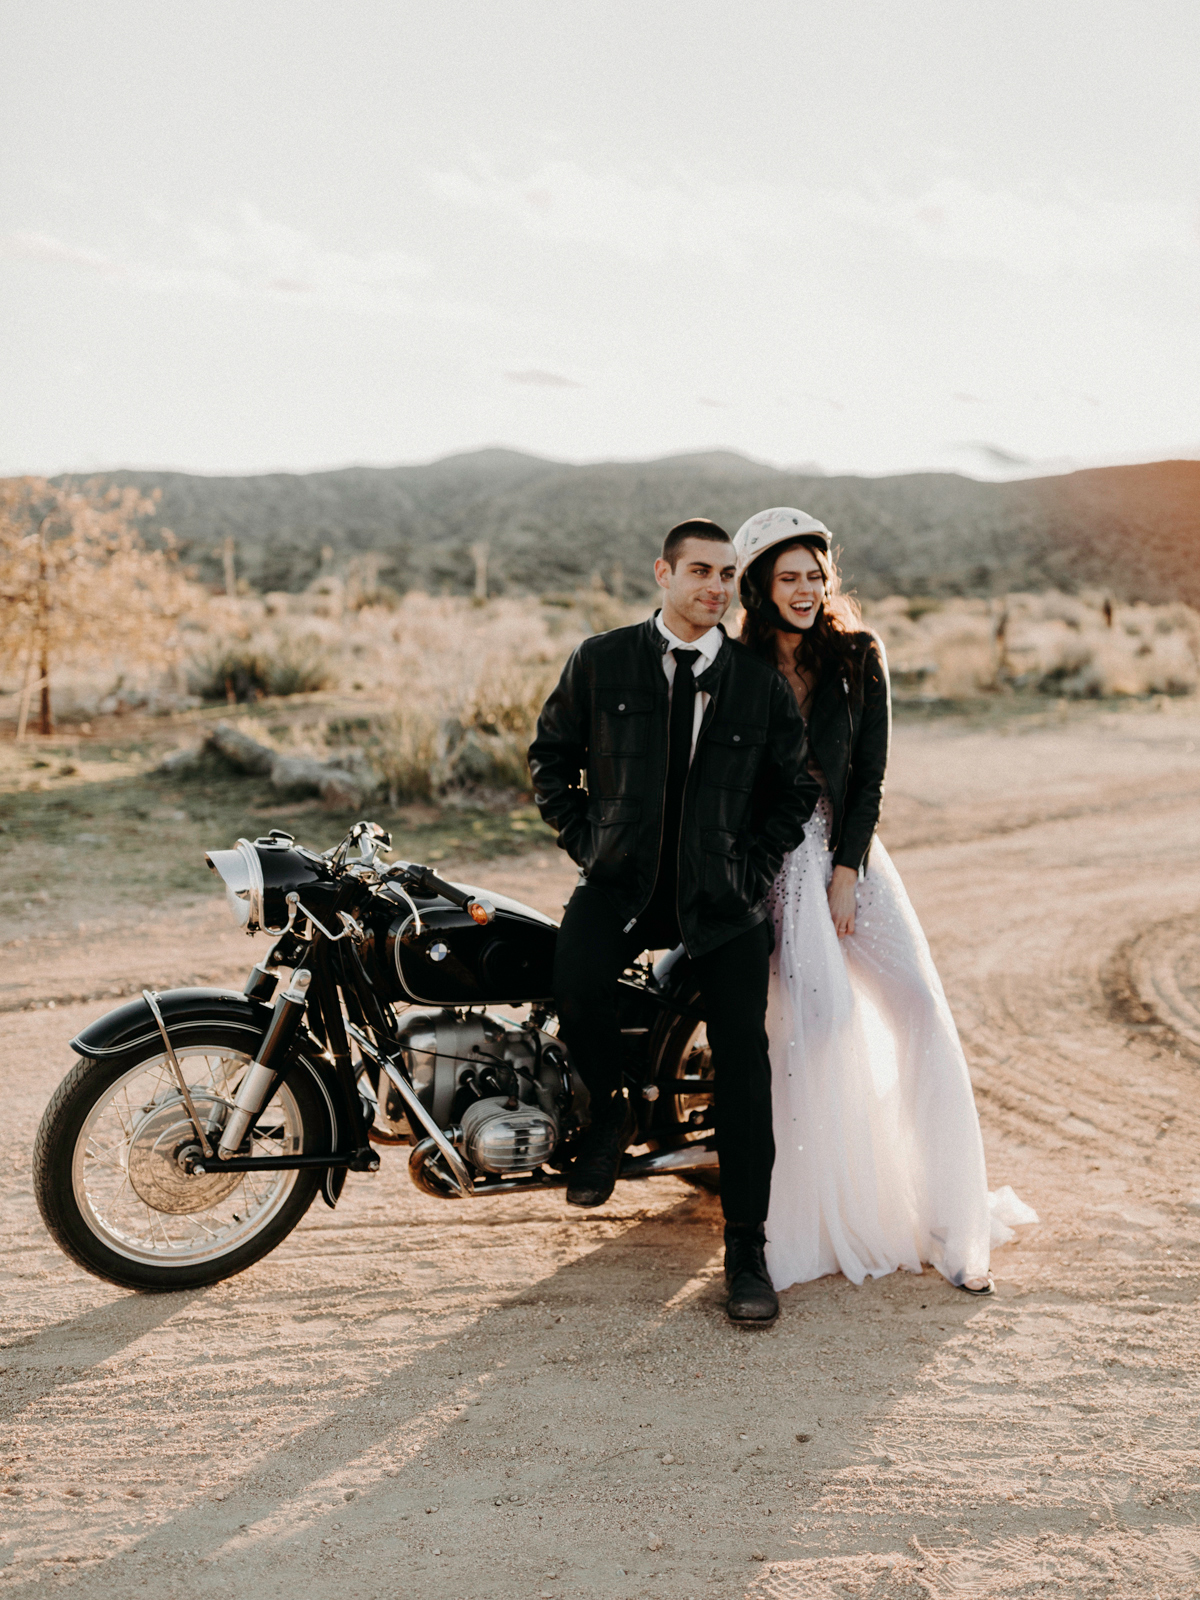 Rugged Desert Wedding Inspiration